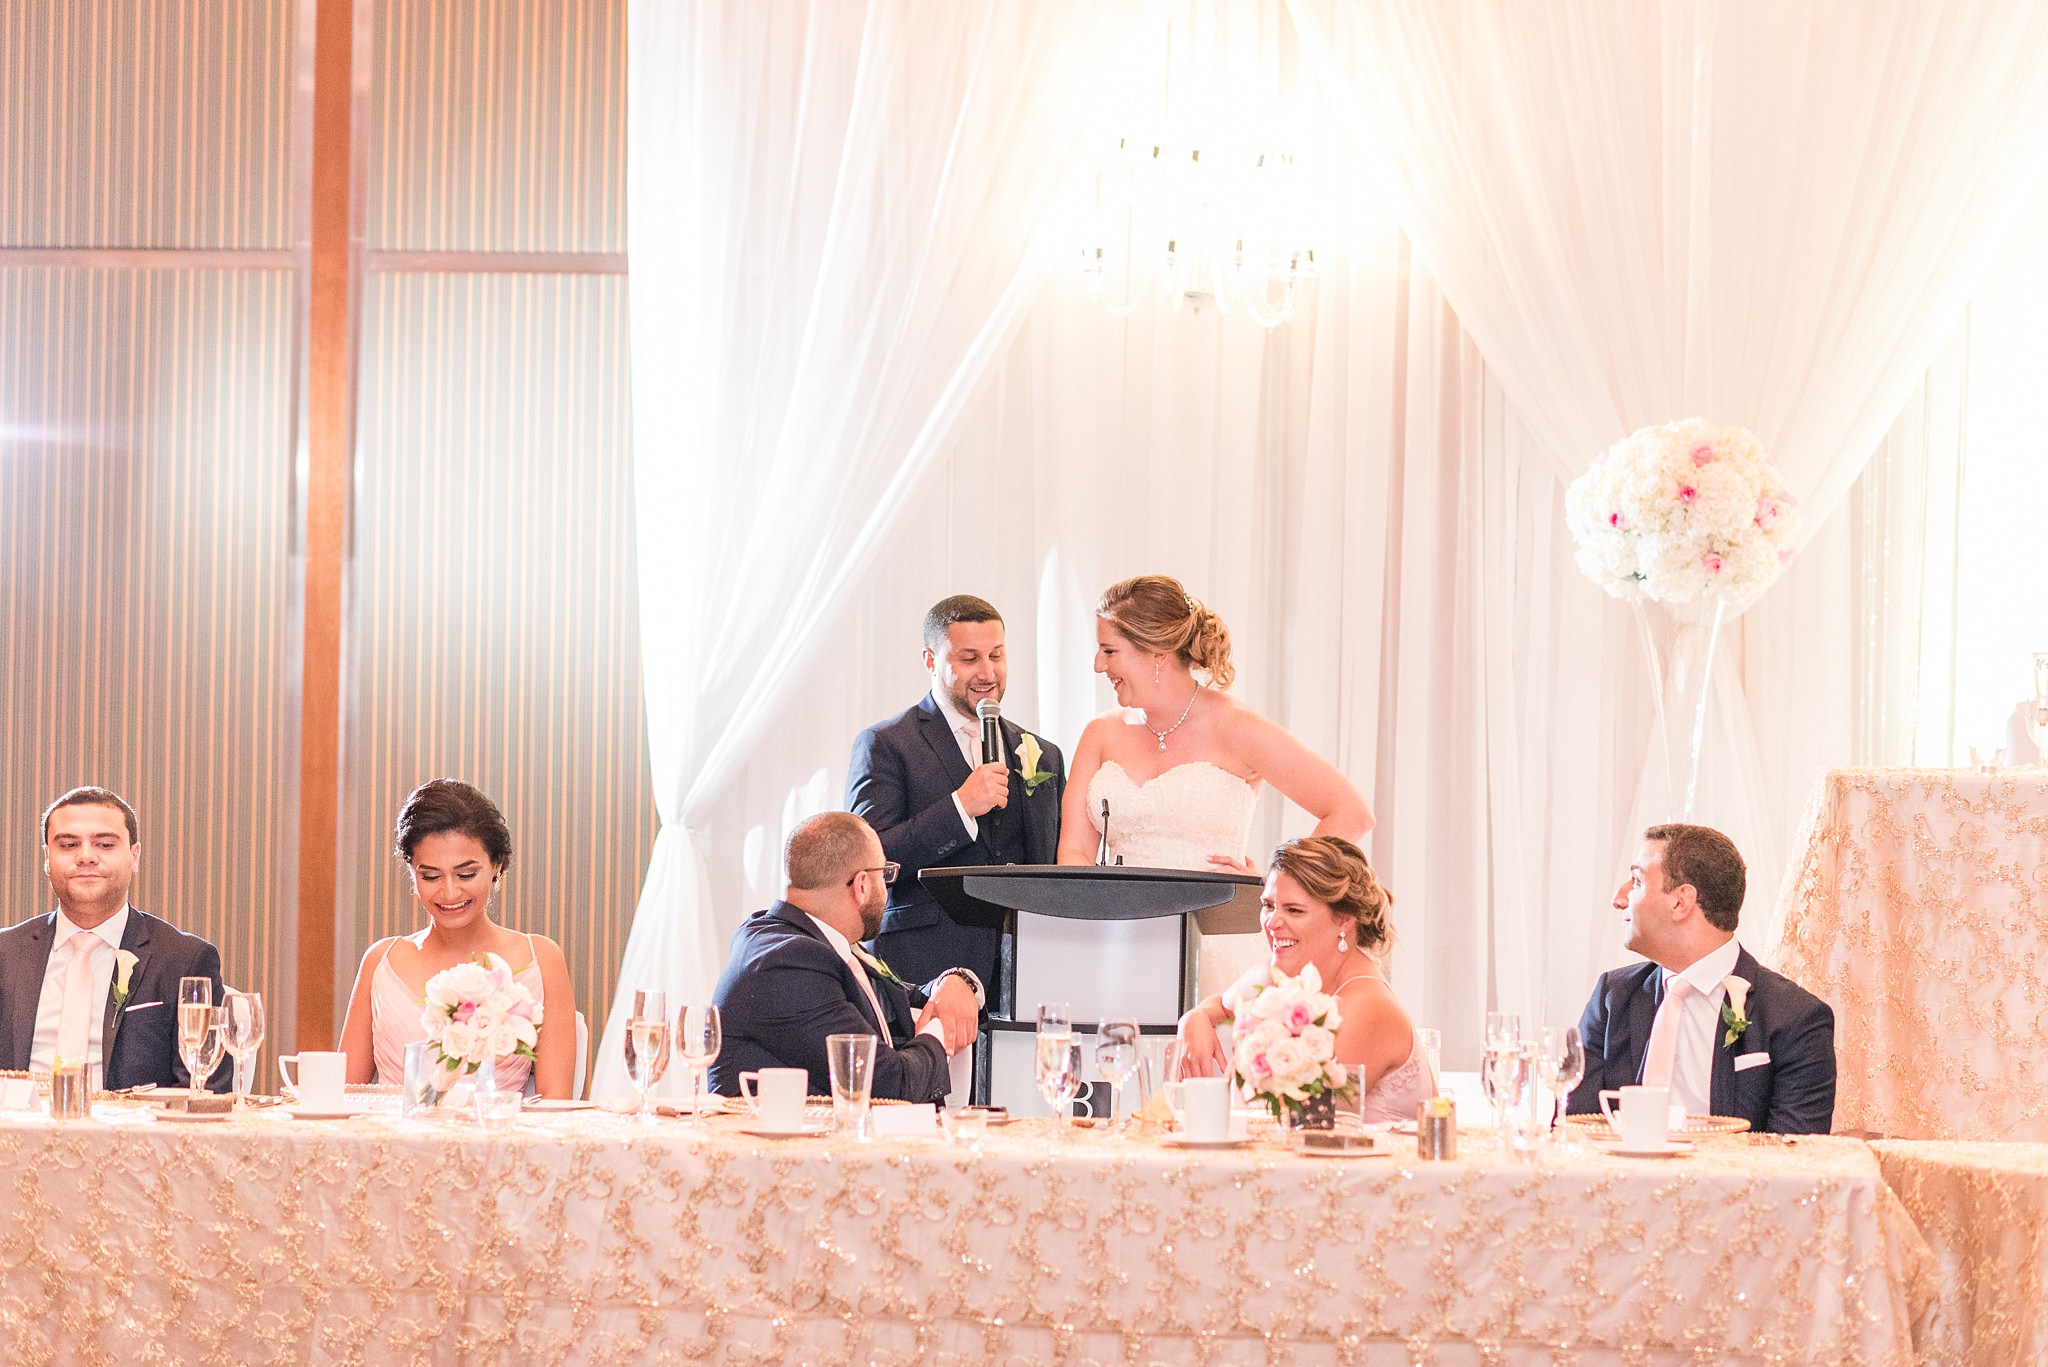 Summer Brookstreet Hotel Wedding | Ottawa Wedding | Wedding photos at St Mary’s Coptic Orthodox Church & Brookstreet Get more inspiration from this fun summertime wedding. #ottawawedding #weddingphotography #ottawaweddings